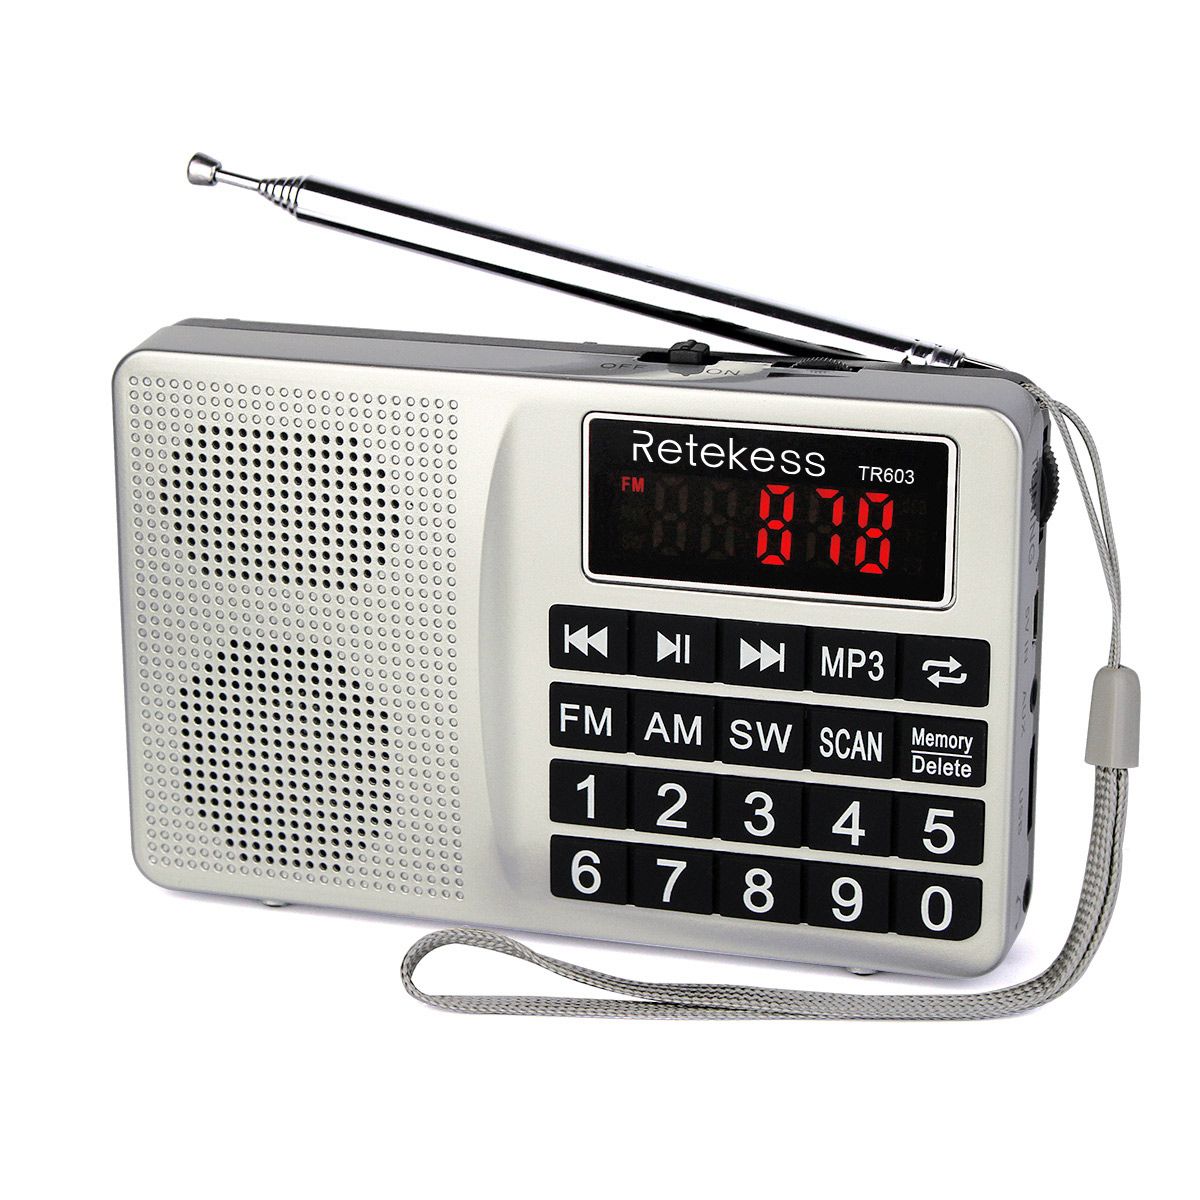 Retekess-Digital-Display-FM-AM-SW-Radio-AUX-MP3-Audio-Player-Speaker-for-Mobile-Phone-Gift-for-famil-1448810